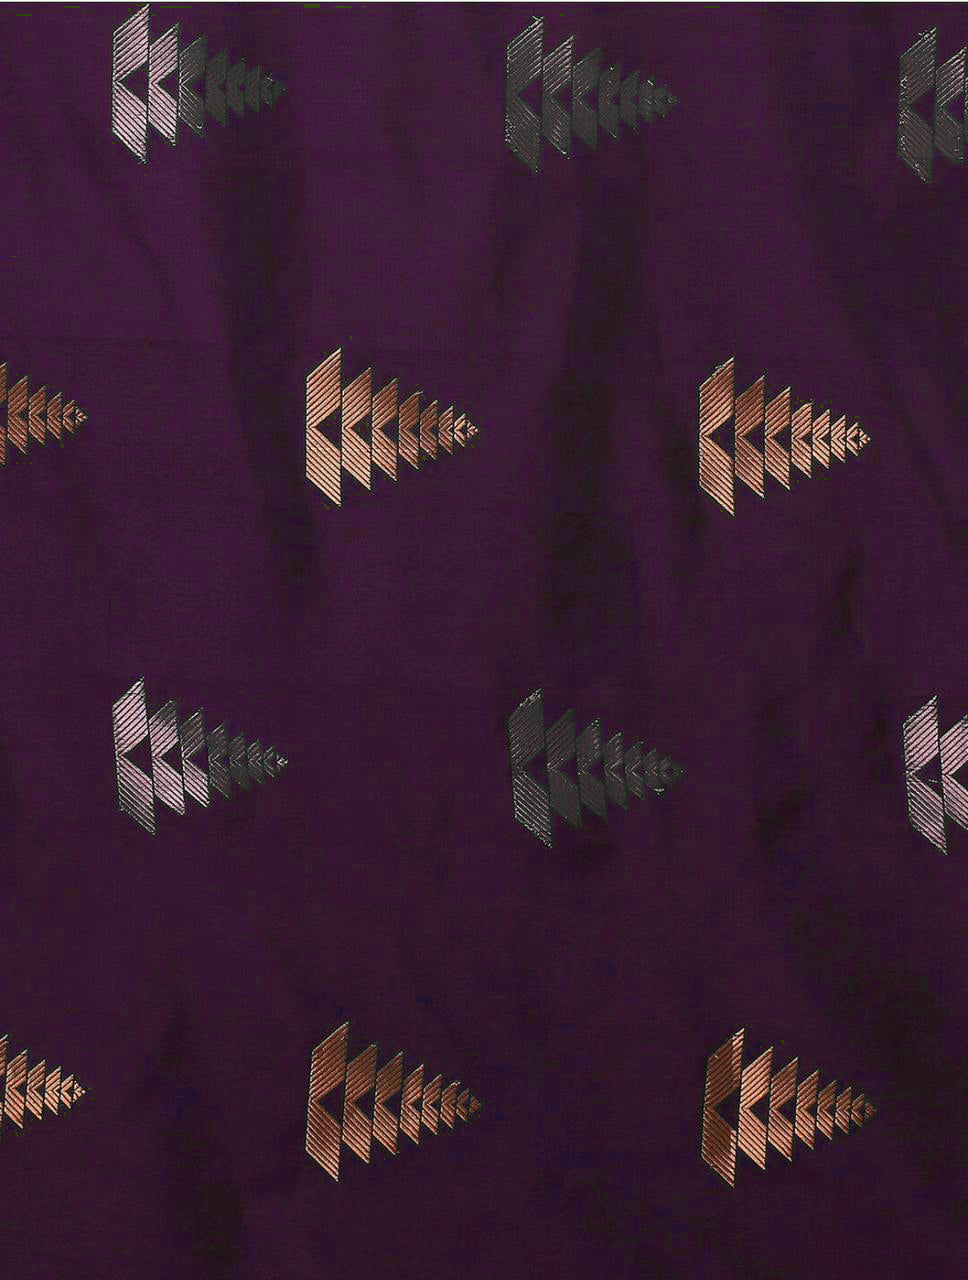 Dazzling Purple Soft Silk Saree With Wonderful Blouse Piece - Colorful Saree